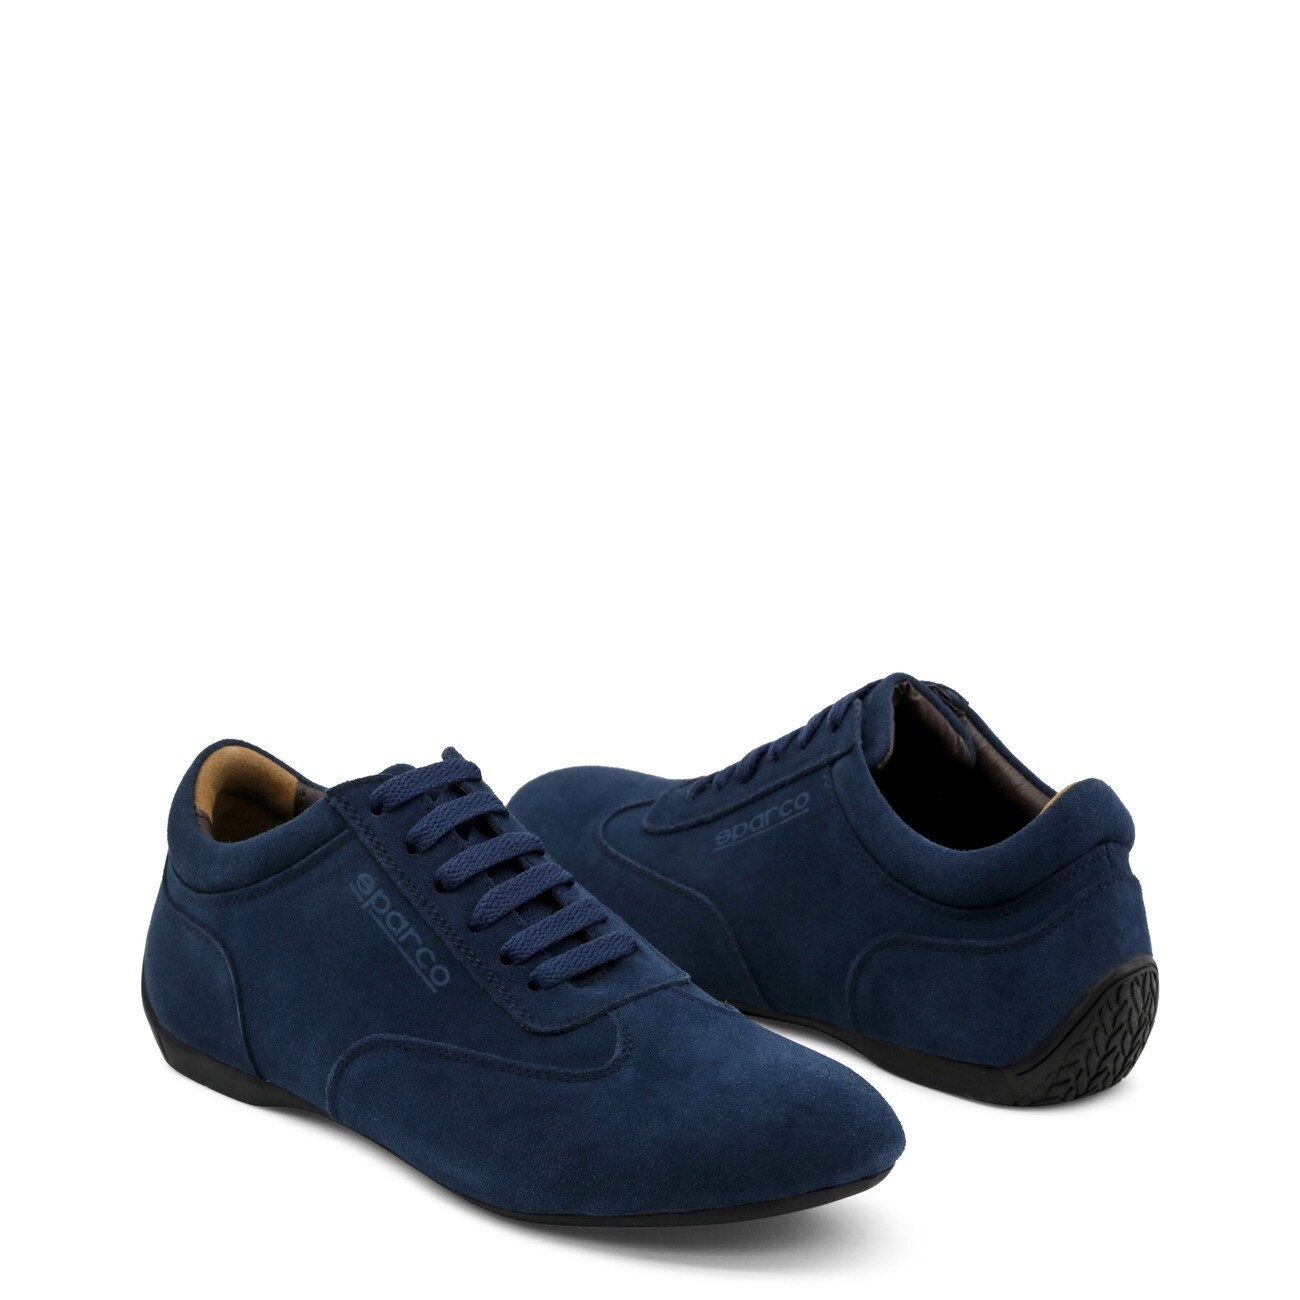 Corrupt doll Artifact Pantofi sport barbati Sparco model IMOLA, culoare Albastru, marime 40 -  eMAG.ro